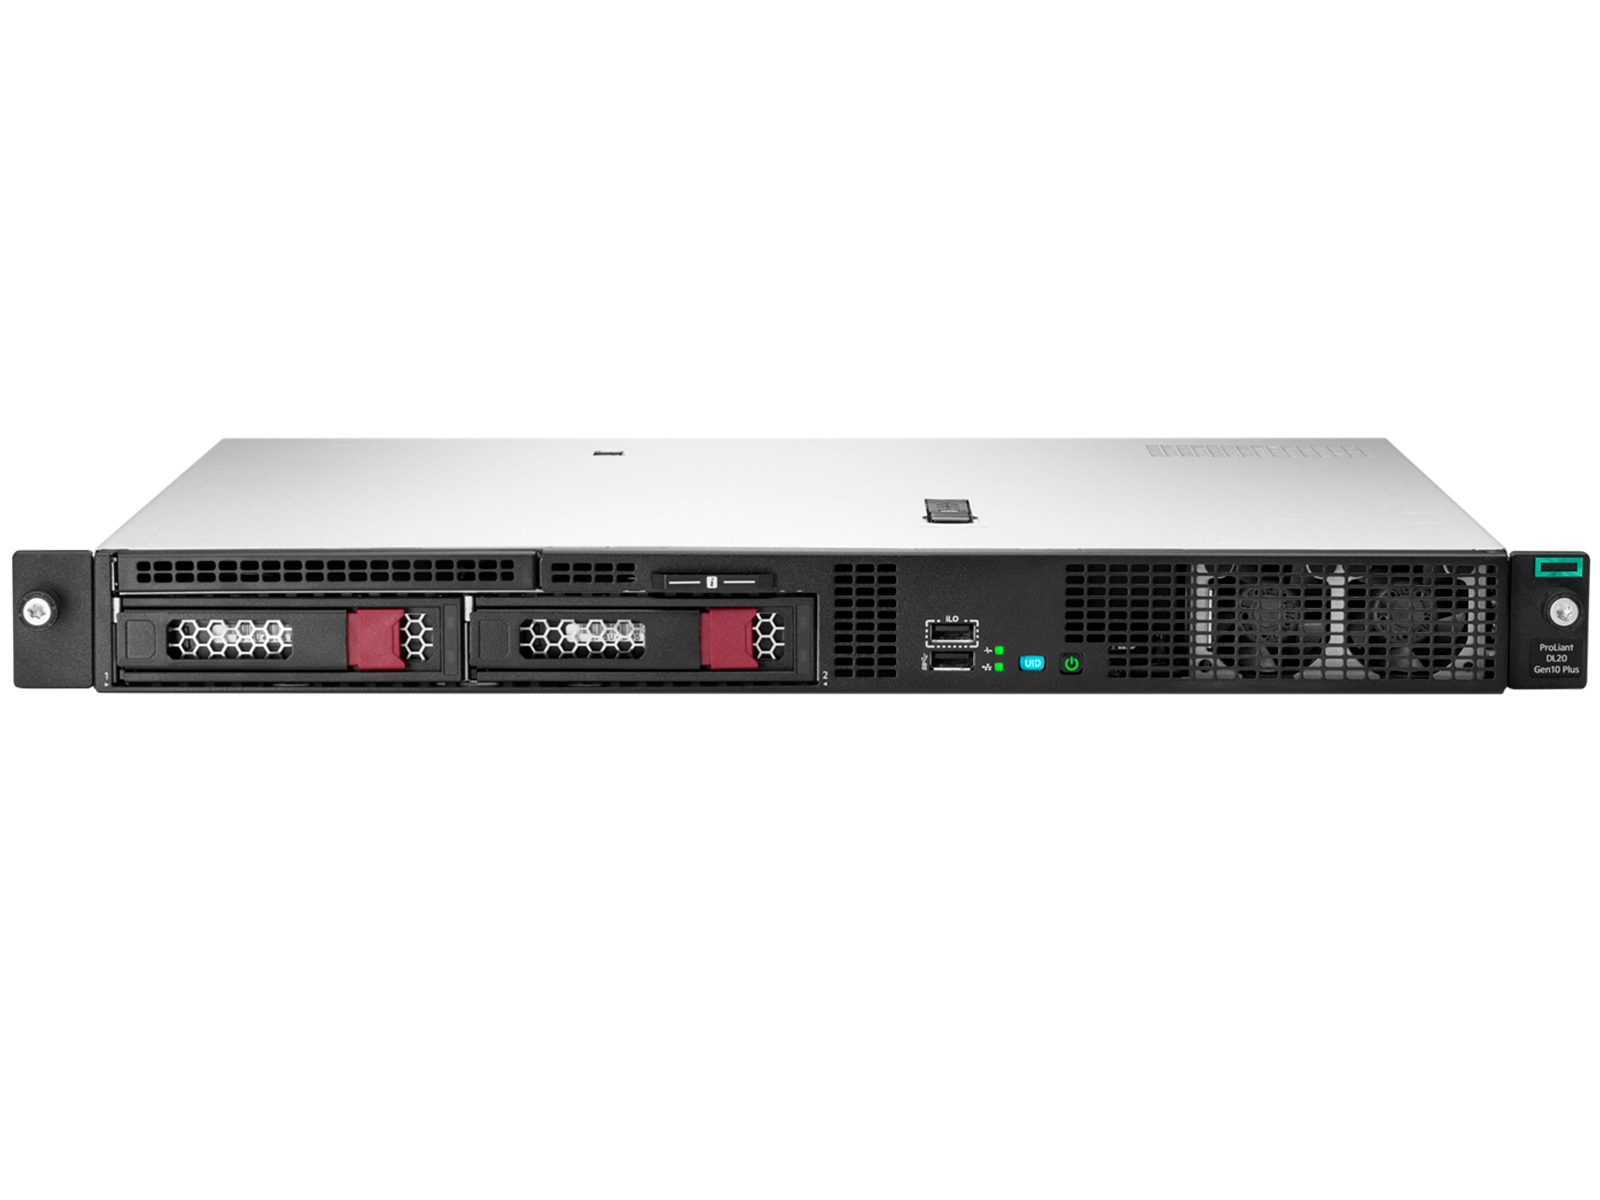 HPE P44112-B21 ProLiant DL20 Gen10+Plus 1U Server Xeon E-2314 2.80GHz 8GB 2LFF-NHP 290W